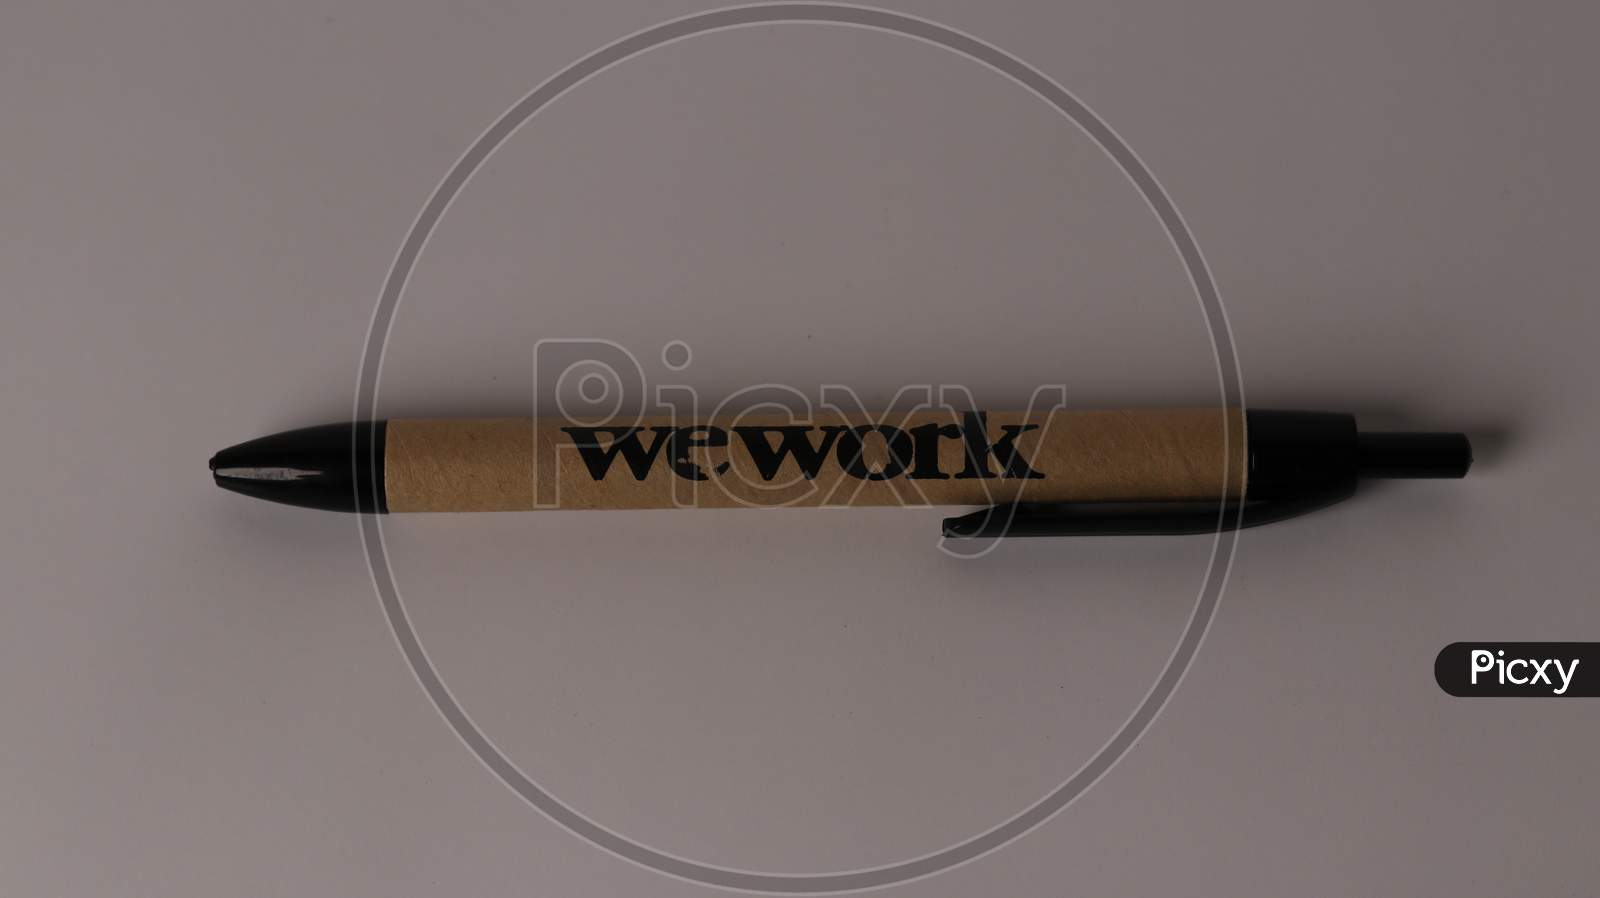 We work branded pen